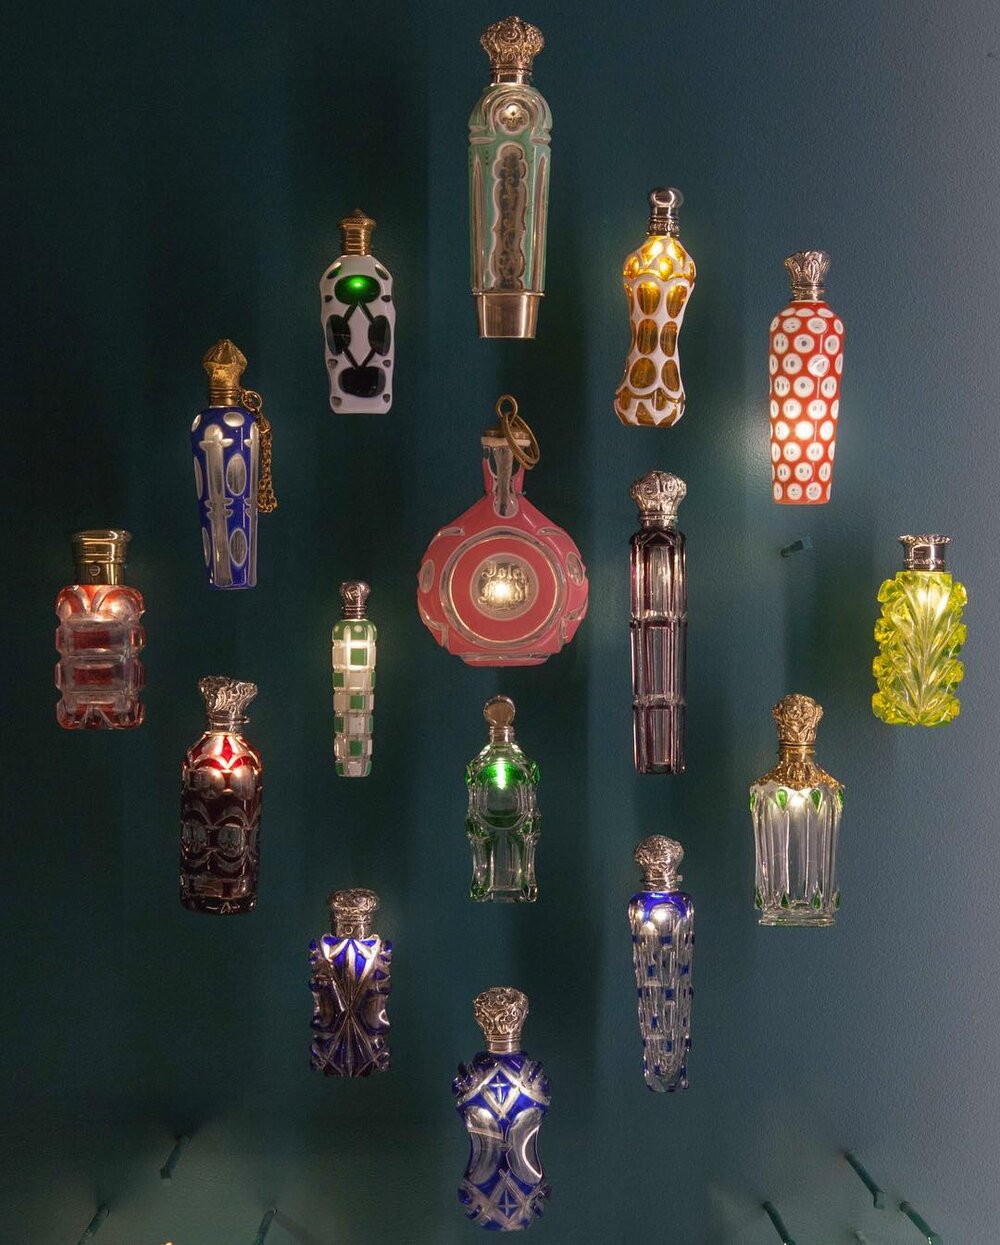 Musée du Parfum - Fragonard (Copy)